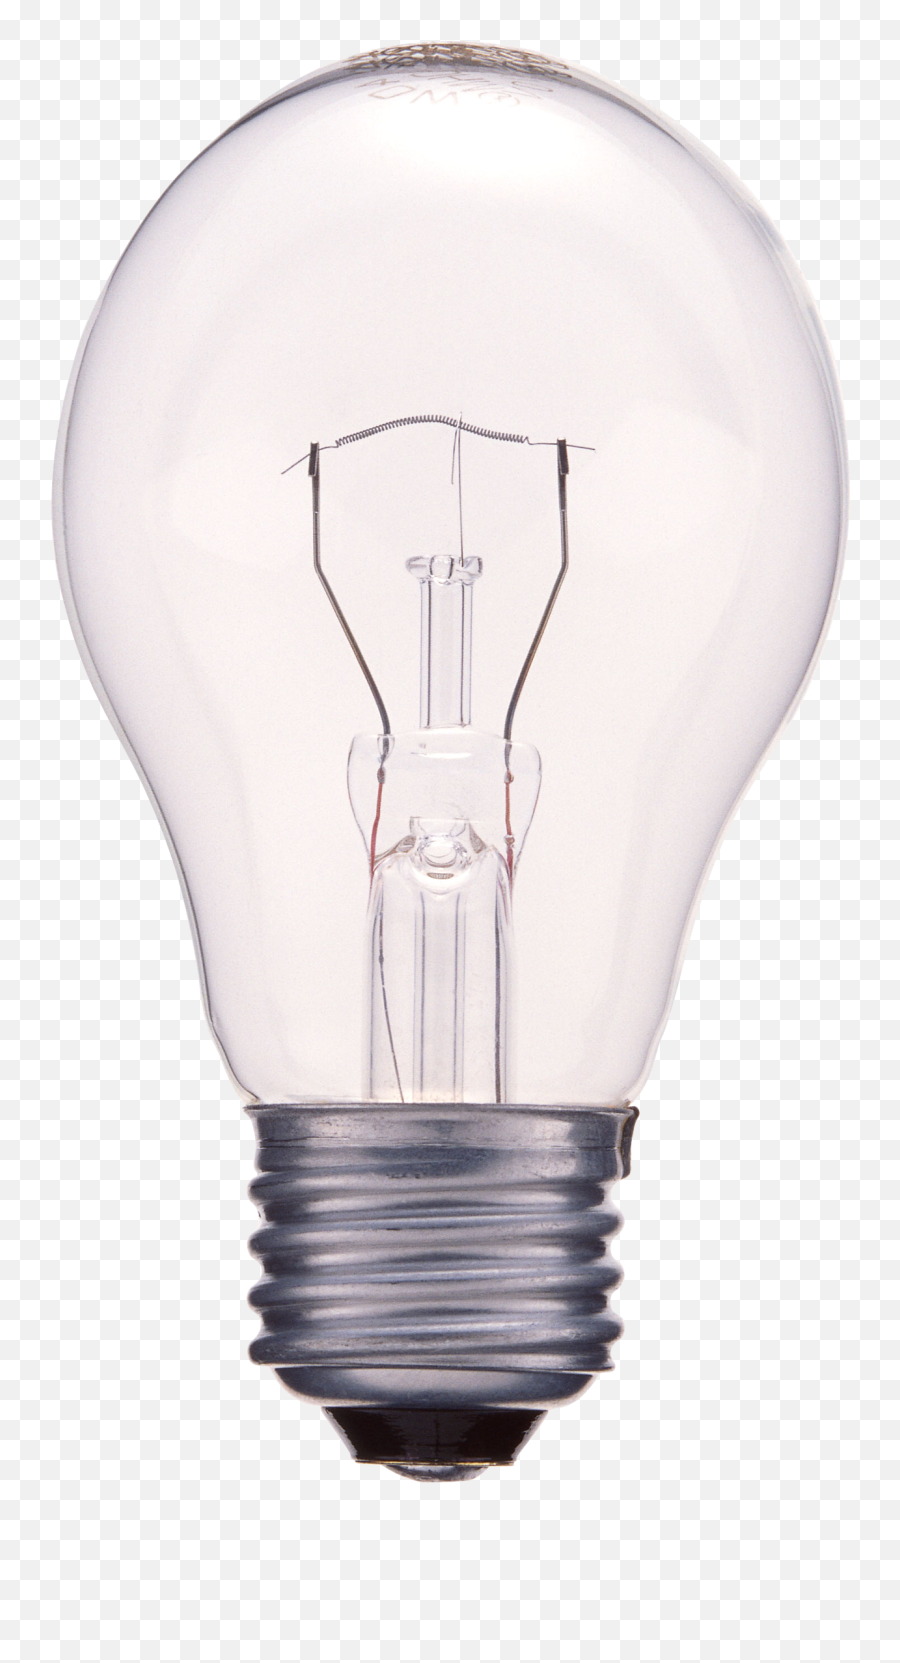 Electric Lamp Png Image - Incandescent Light Bulb,Lamp Transparent Background